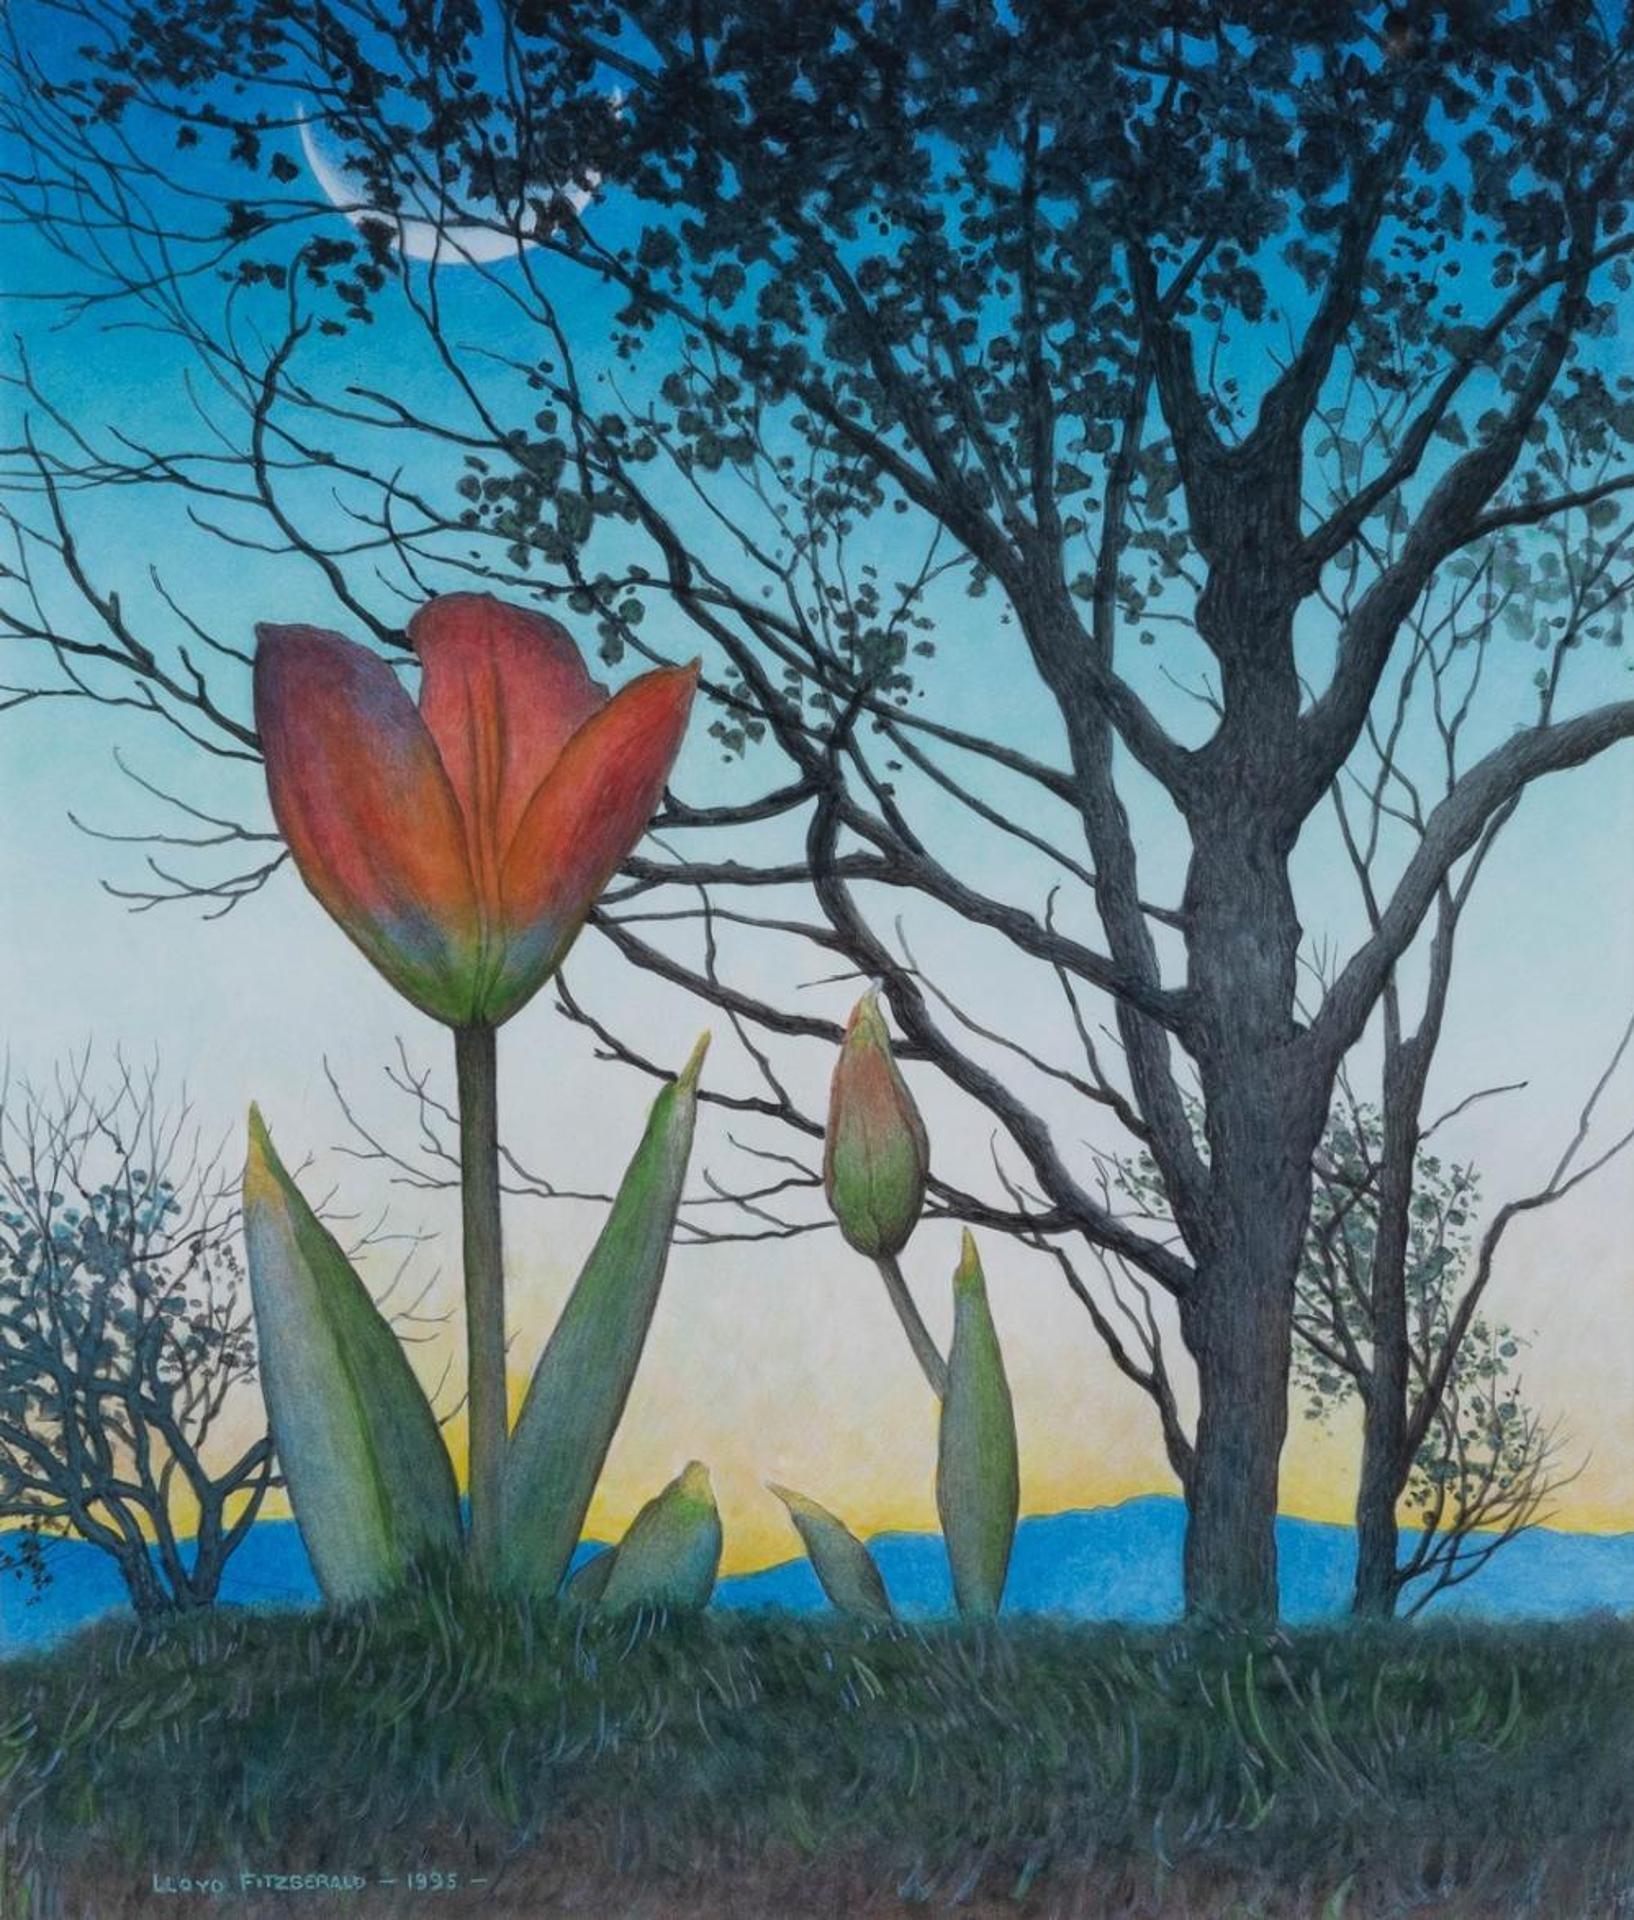 Lloyd Fitzgerald (1941) - Tulip and Trees